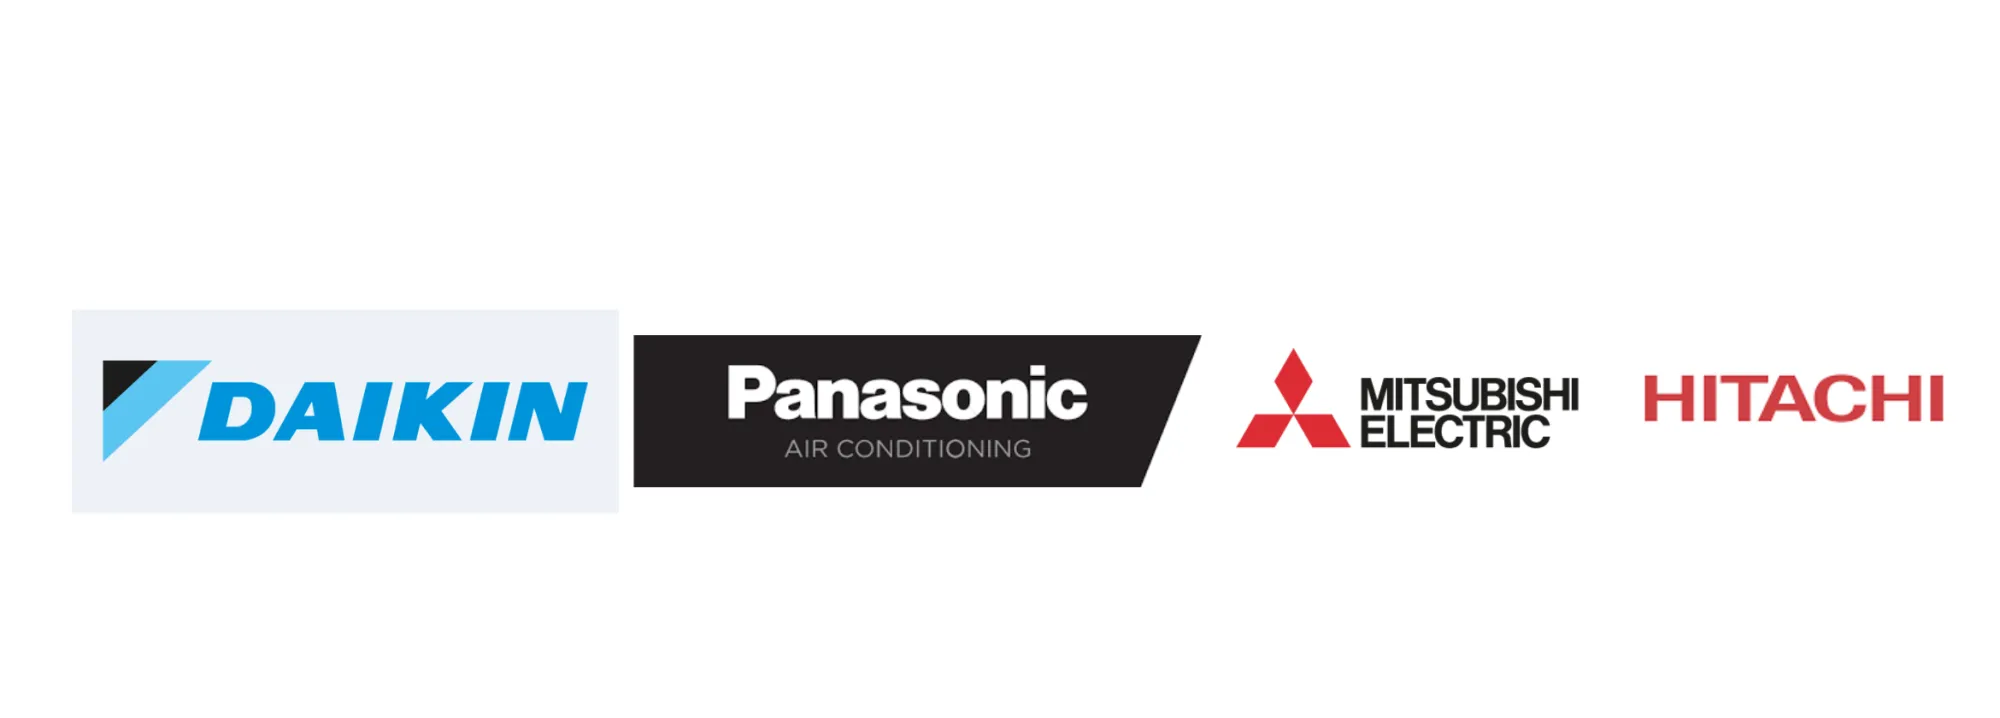 Leading Heat Pump Brands - Daikin, Panasonic, Mitsubishi Electric, Hitachi